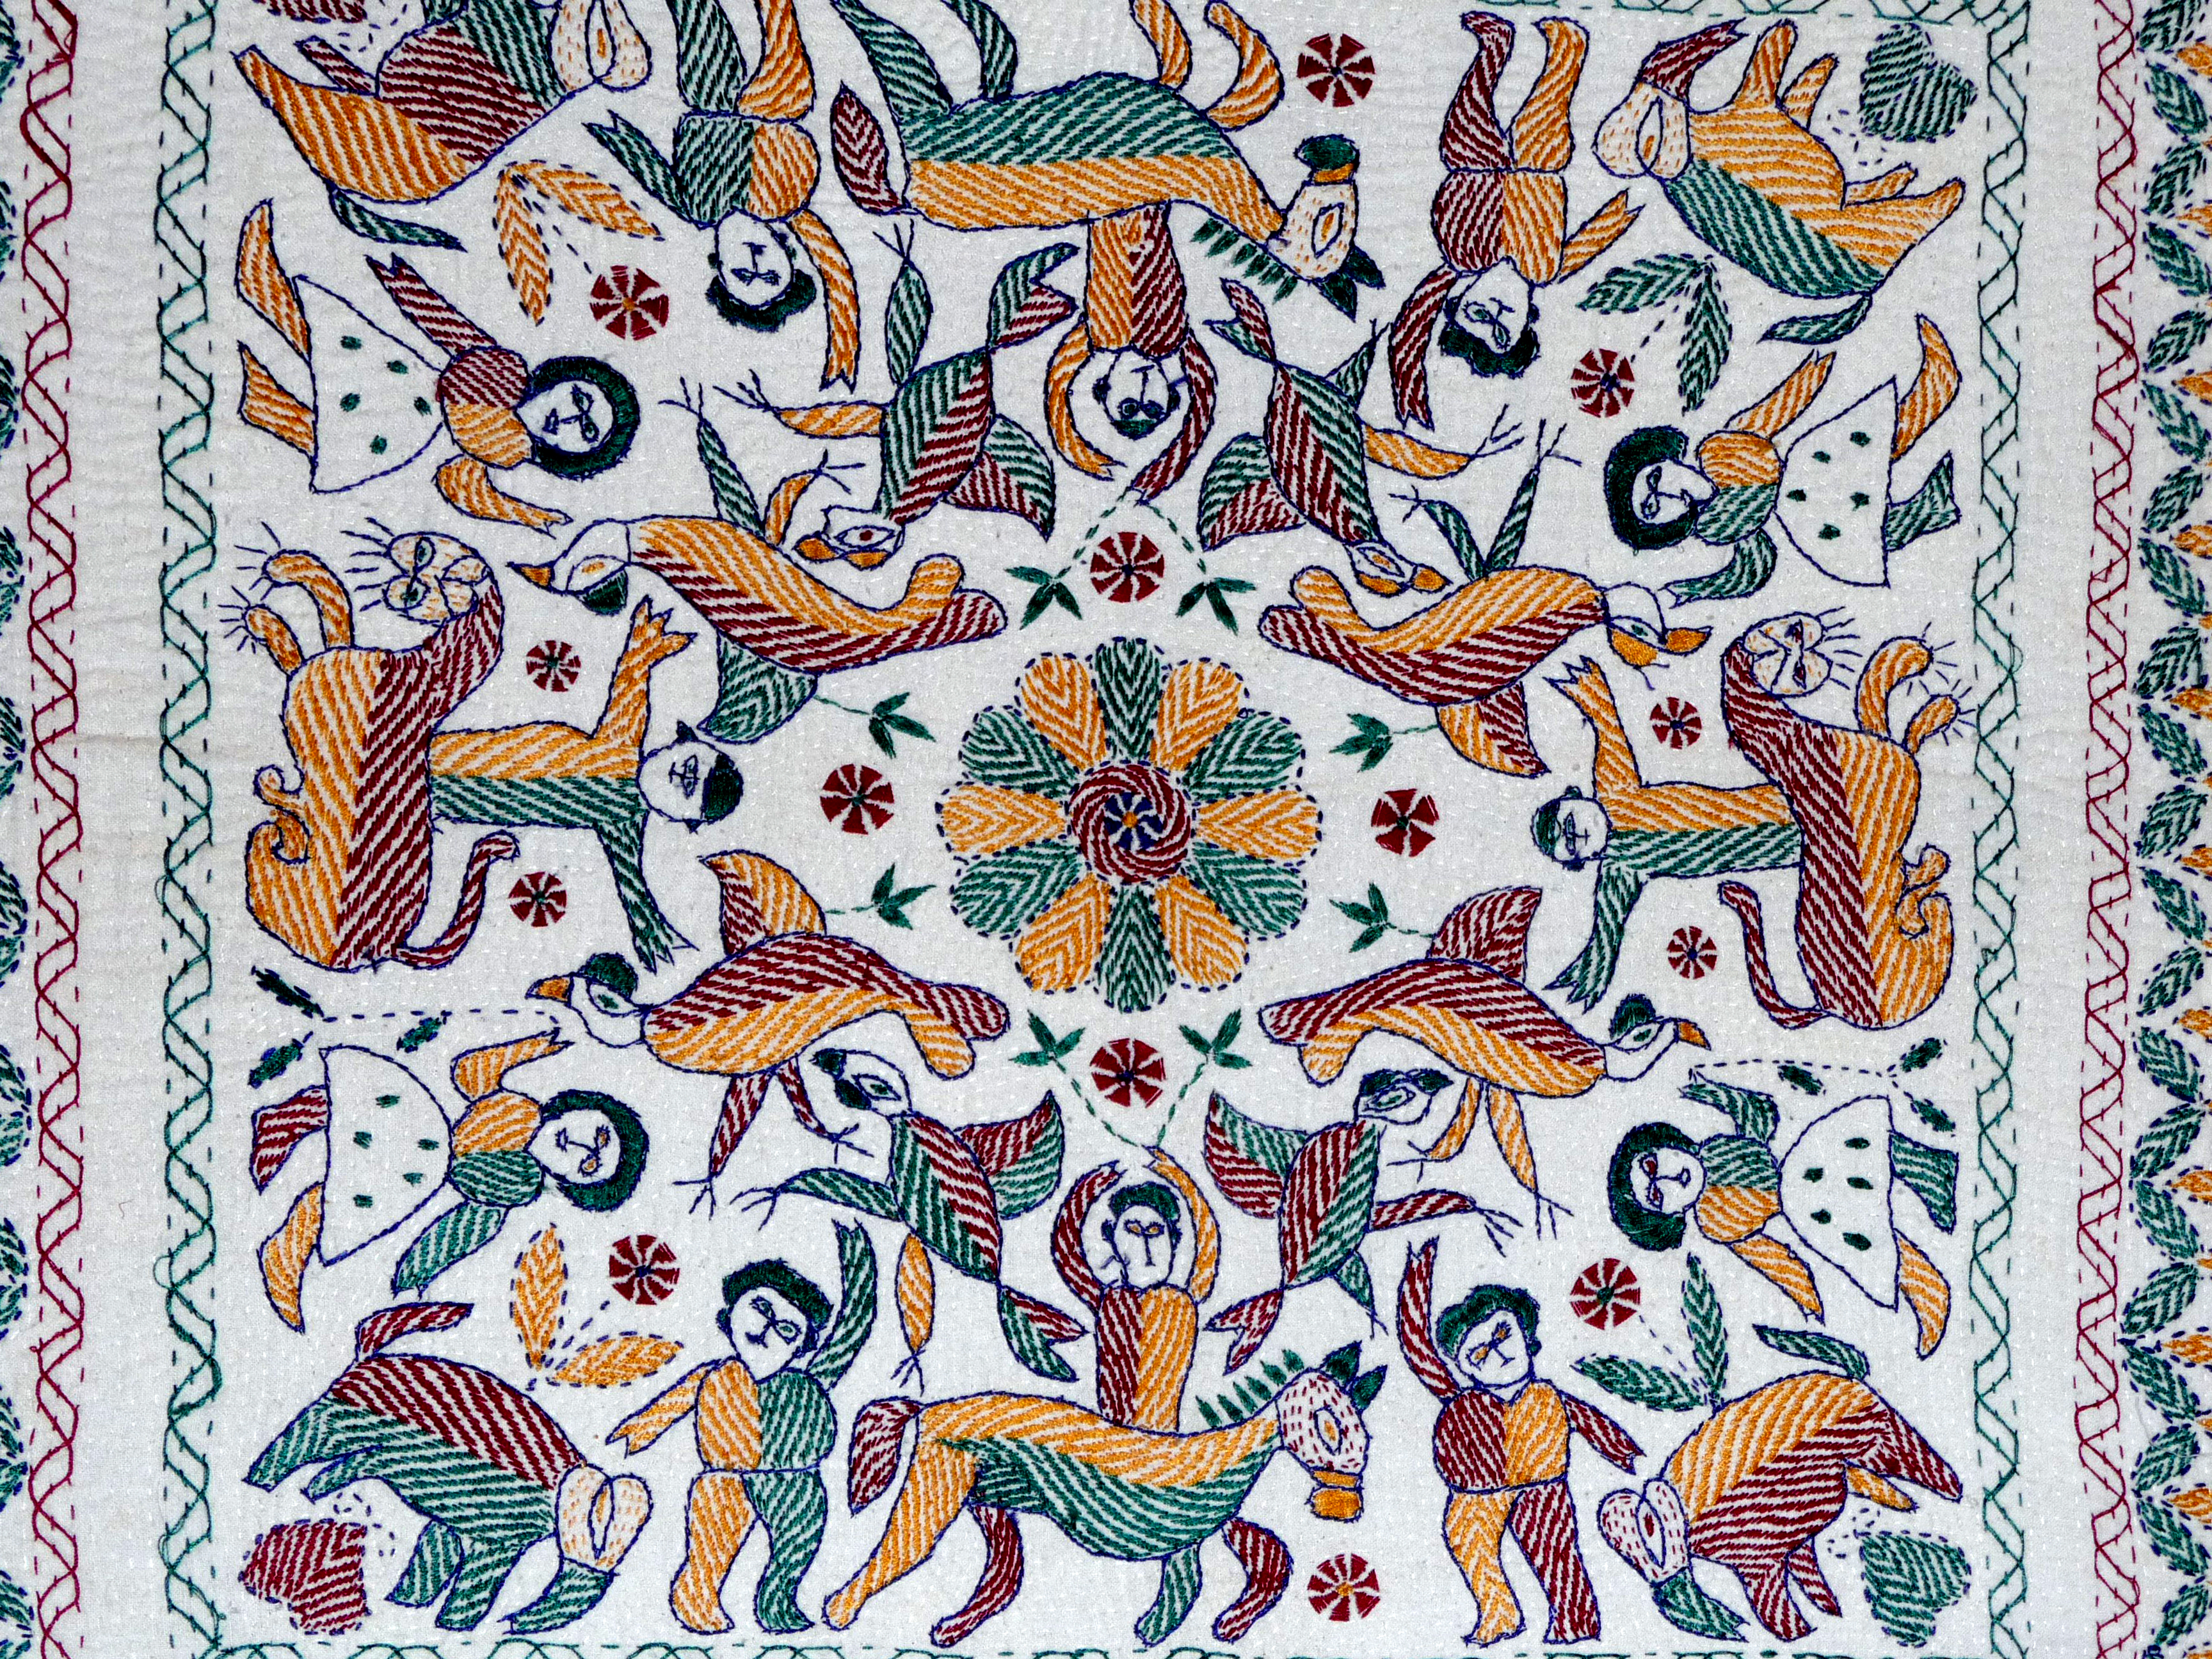 kantha embroidery made in Sreepur, Bangladesh